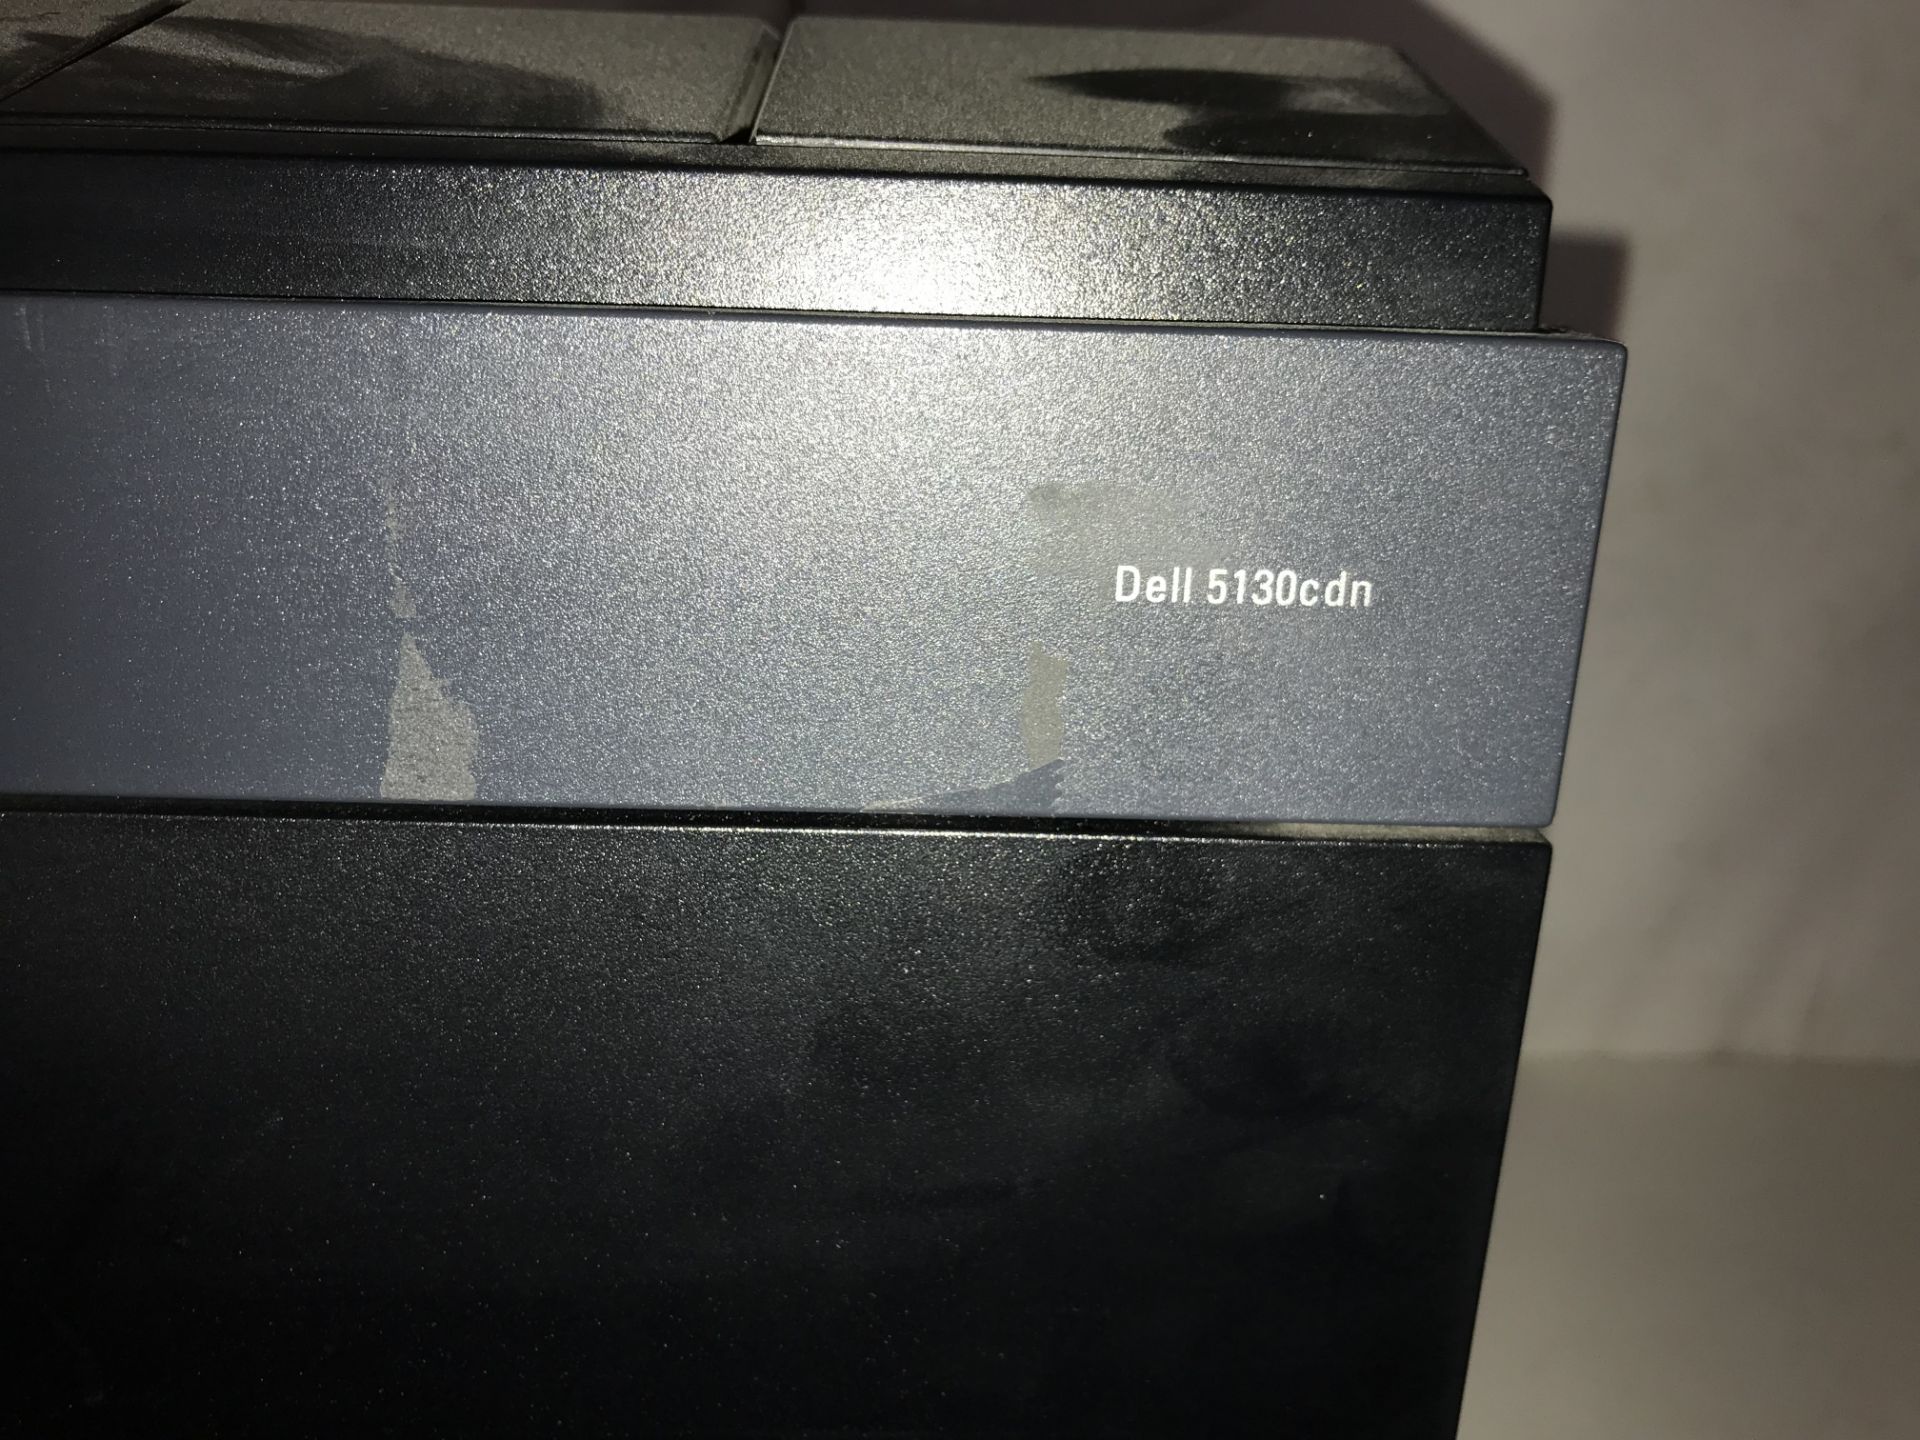 Dell 5130cdn Colour Laser Printer - Image 3 of 6